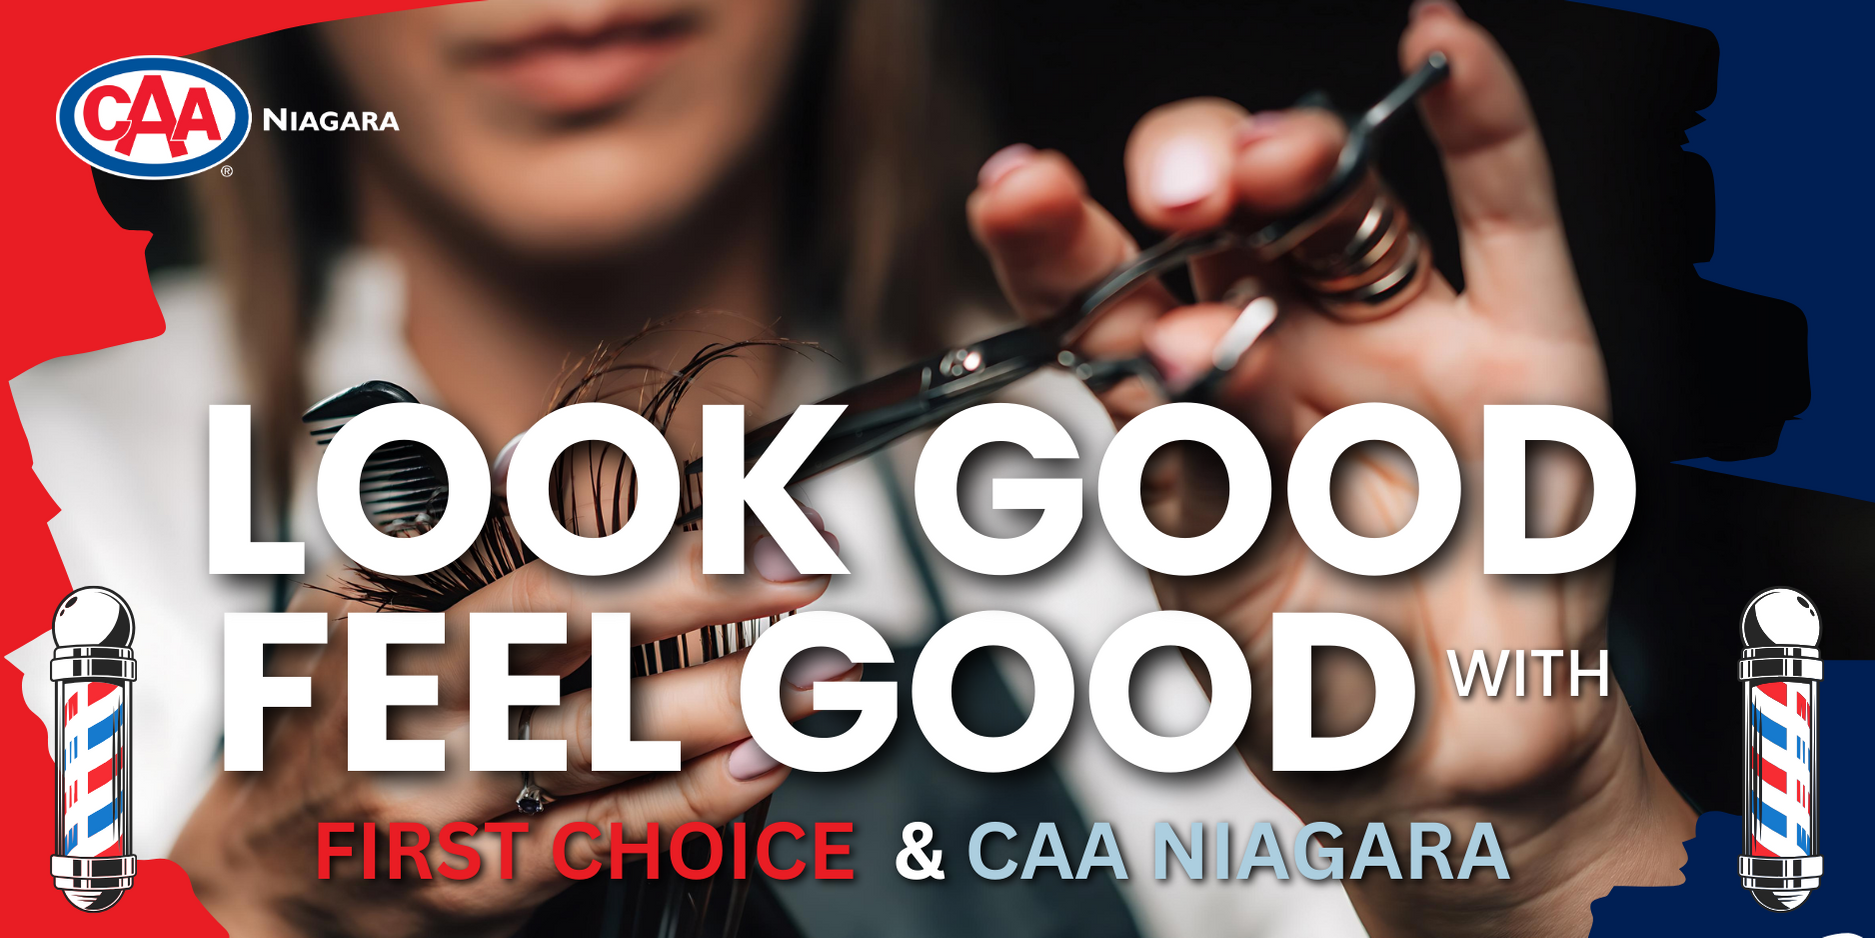 Look Good Feel Good with First Choice and CAA Niagara